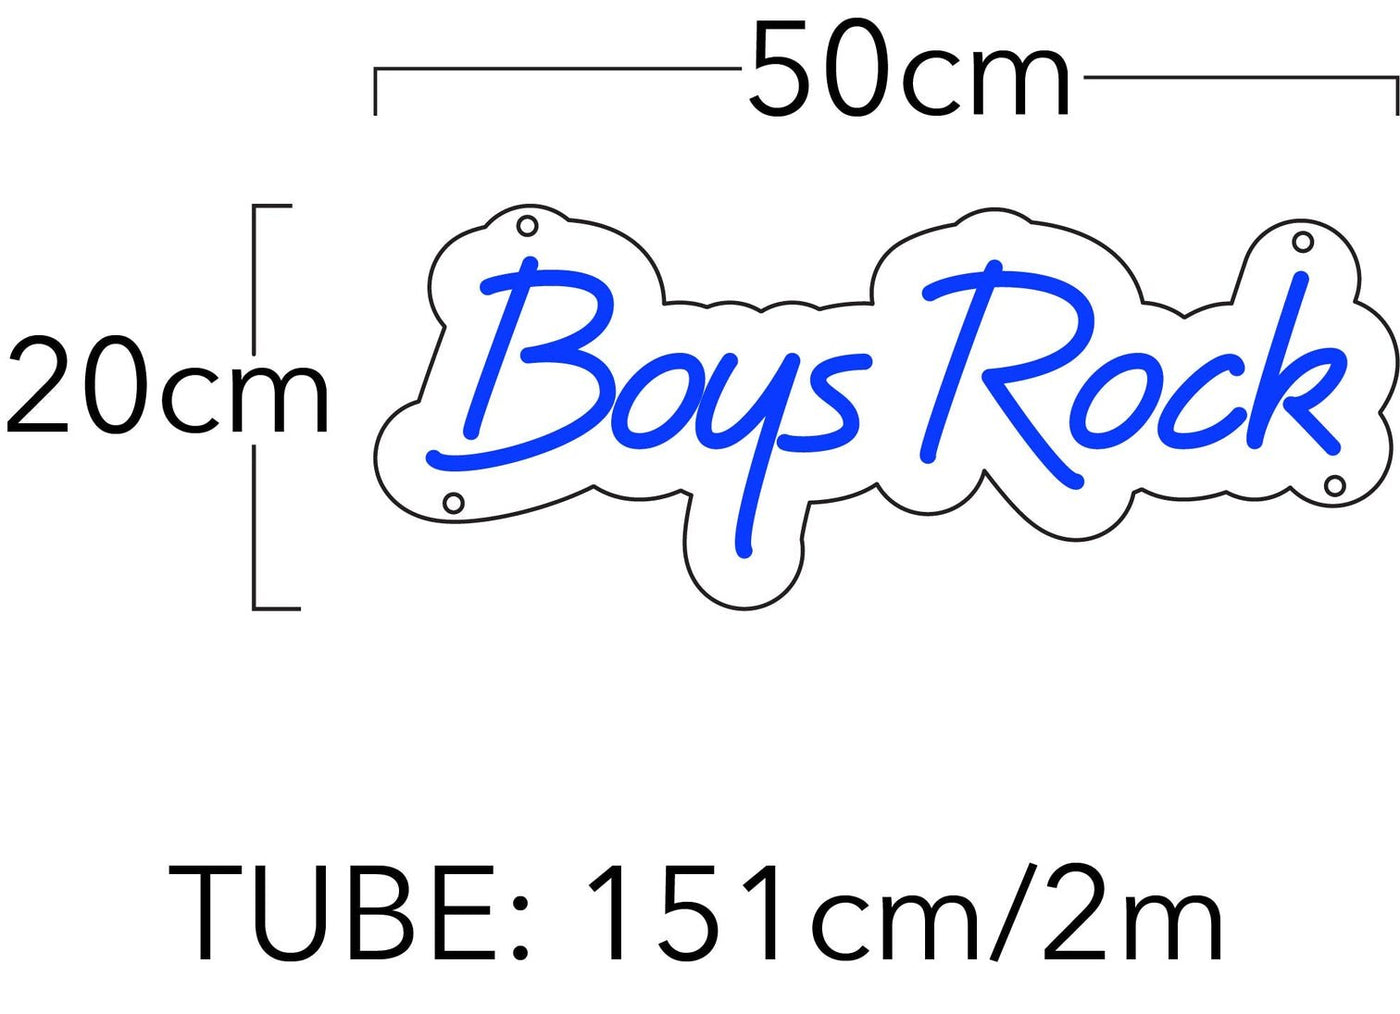 Boys Rock LED Neon sign - 20inchBlue